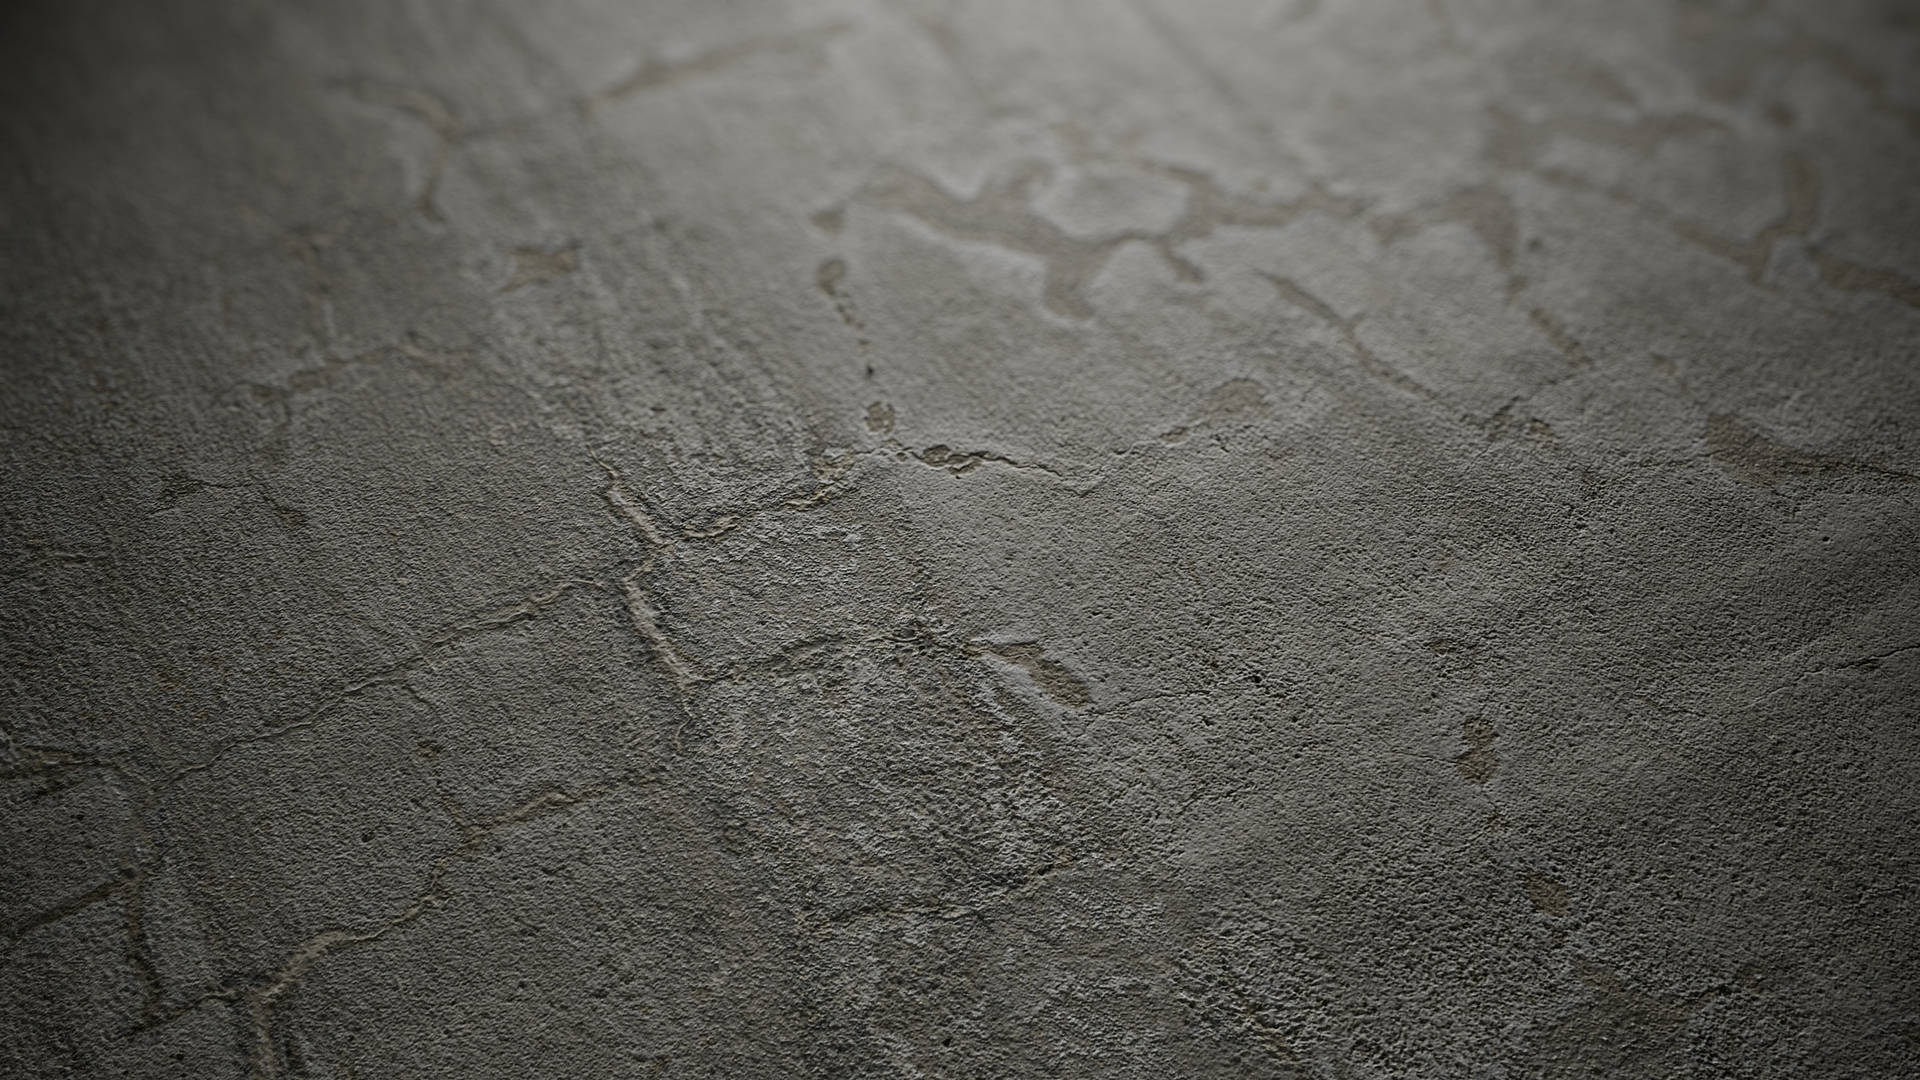 PX Concrete Wall 01 Preview 01 